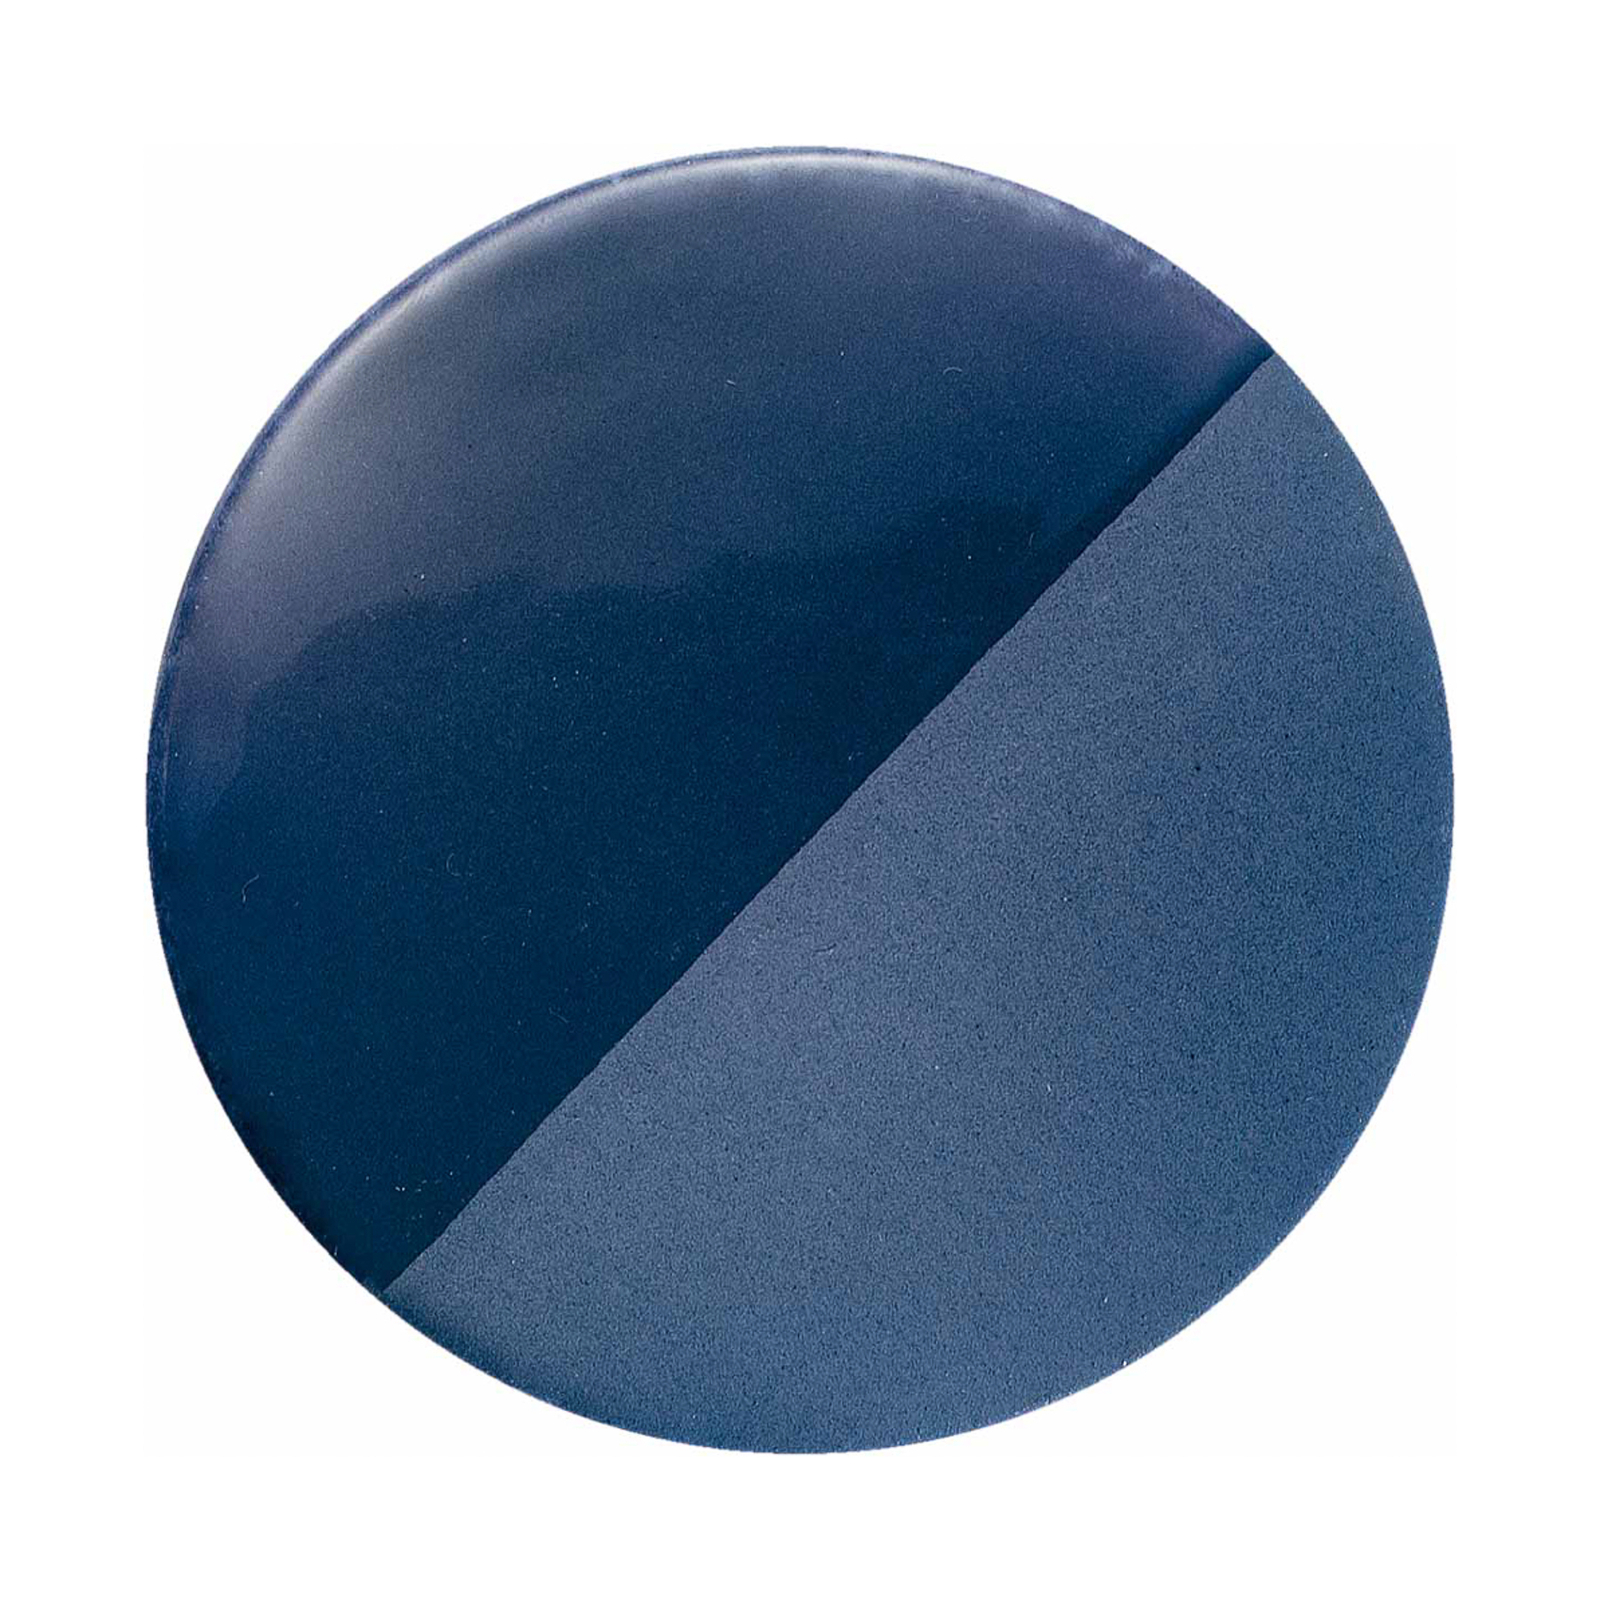 Obesek Caxixi iz keramike, modre barve